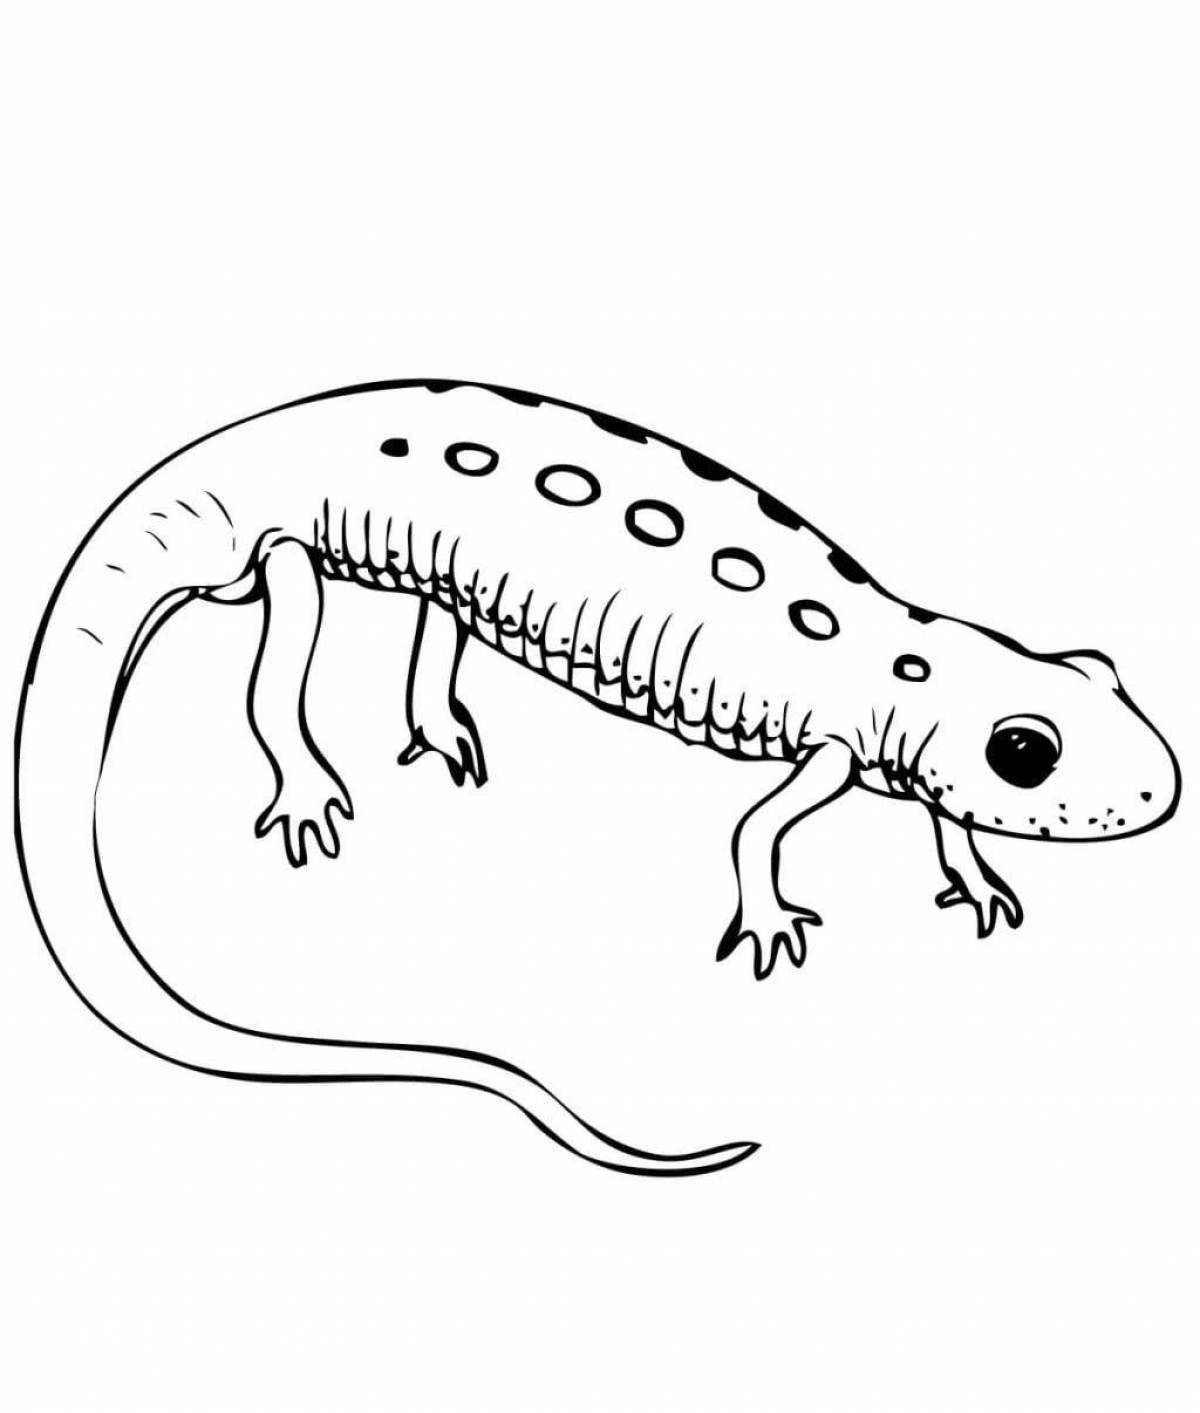 Glitter salamander coloring page